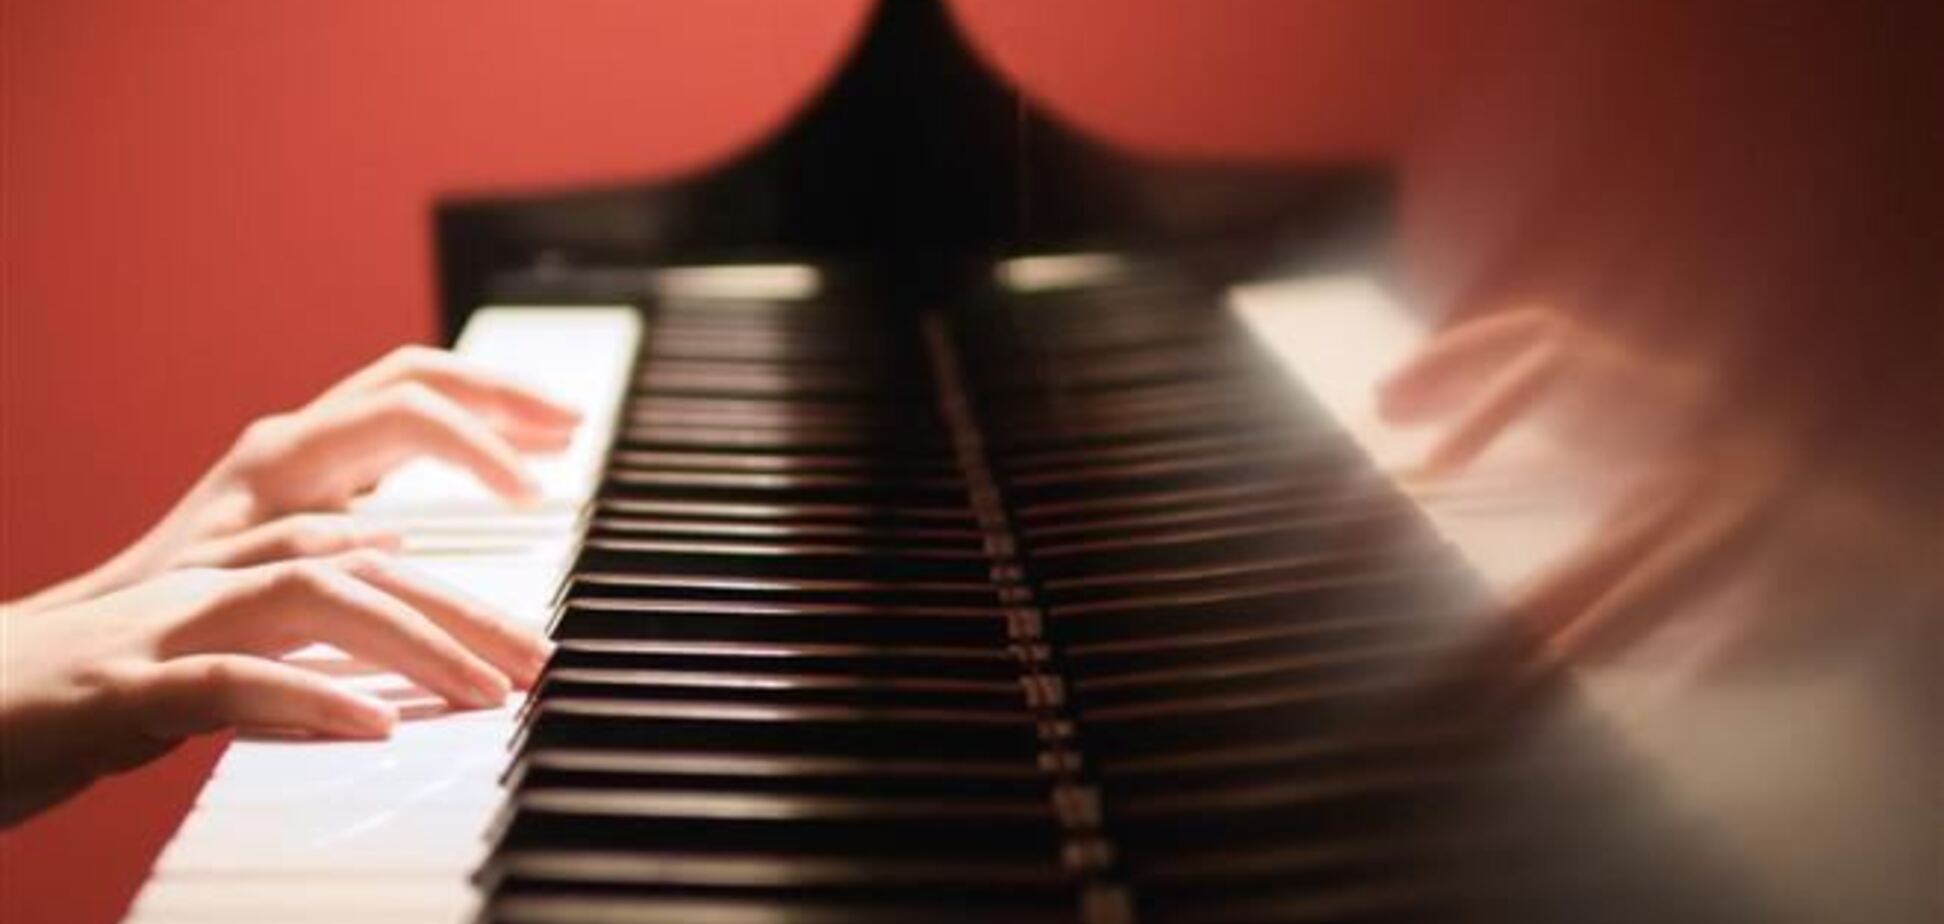 Испанскую пианистку хотят посадить за игру на 7 лет 